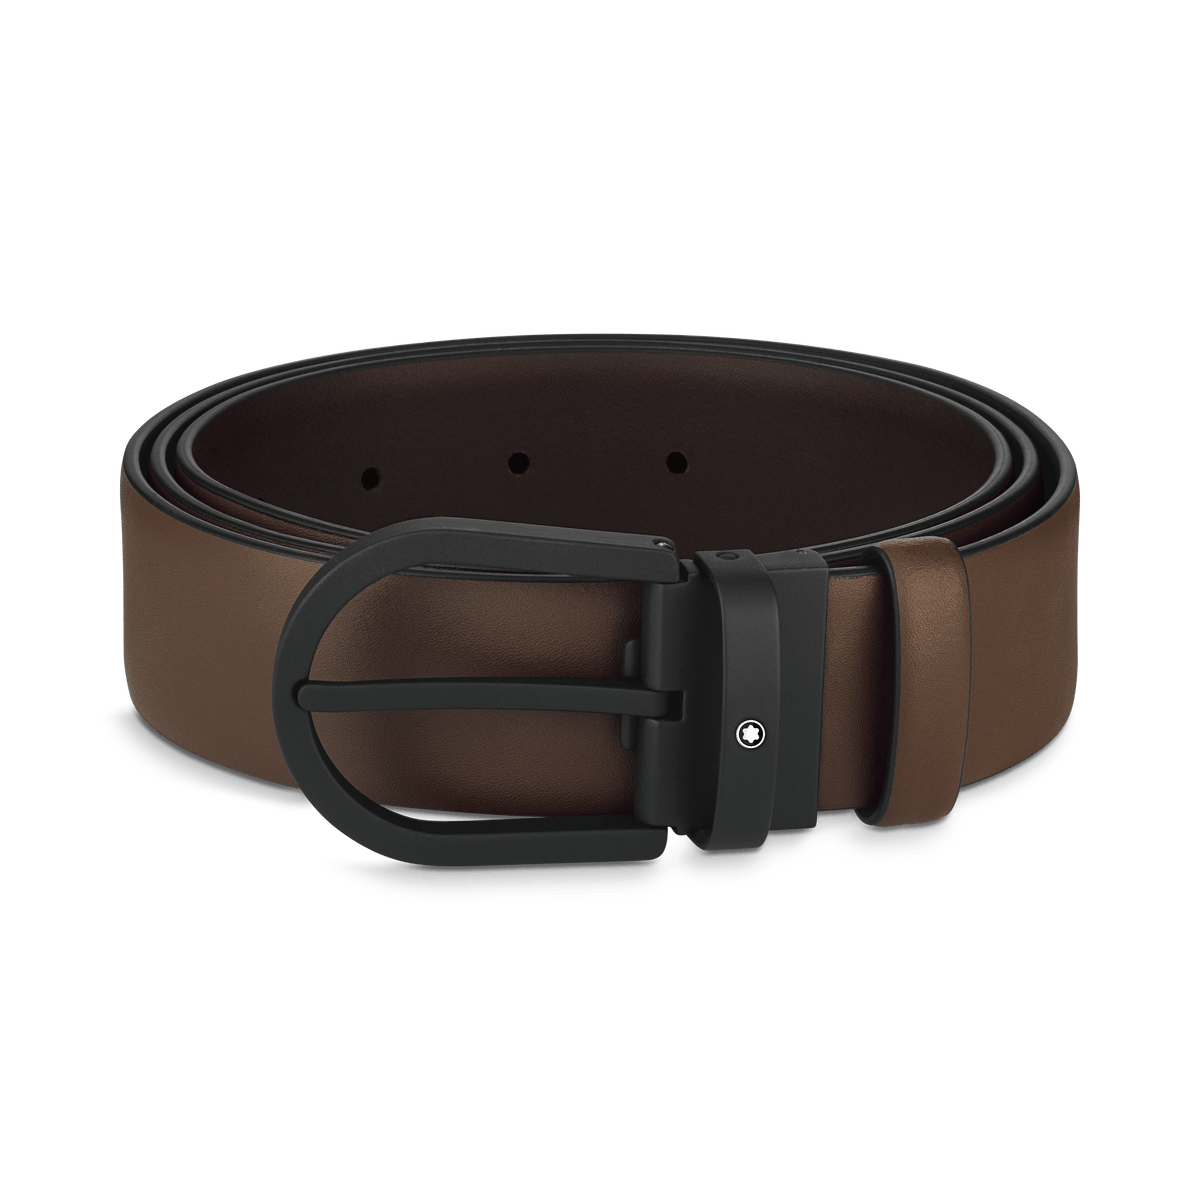 Horseshoe buckle brown 35 mm leather belt